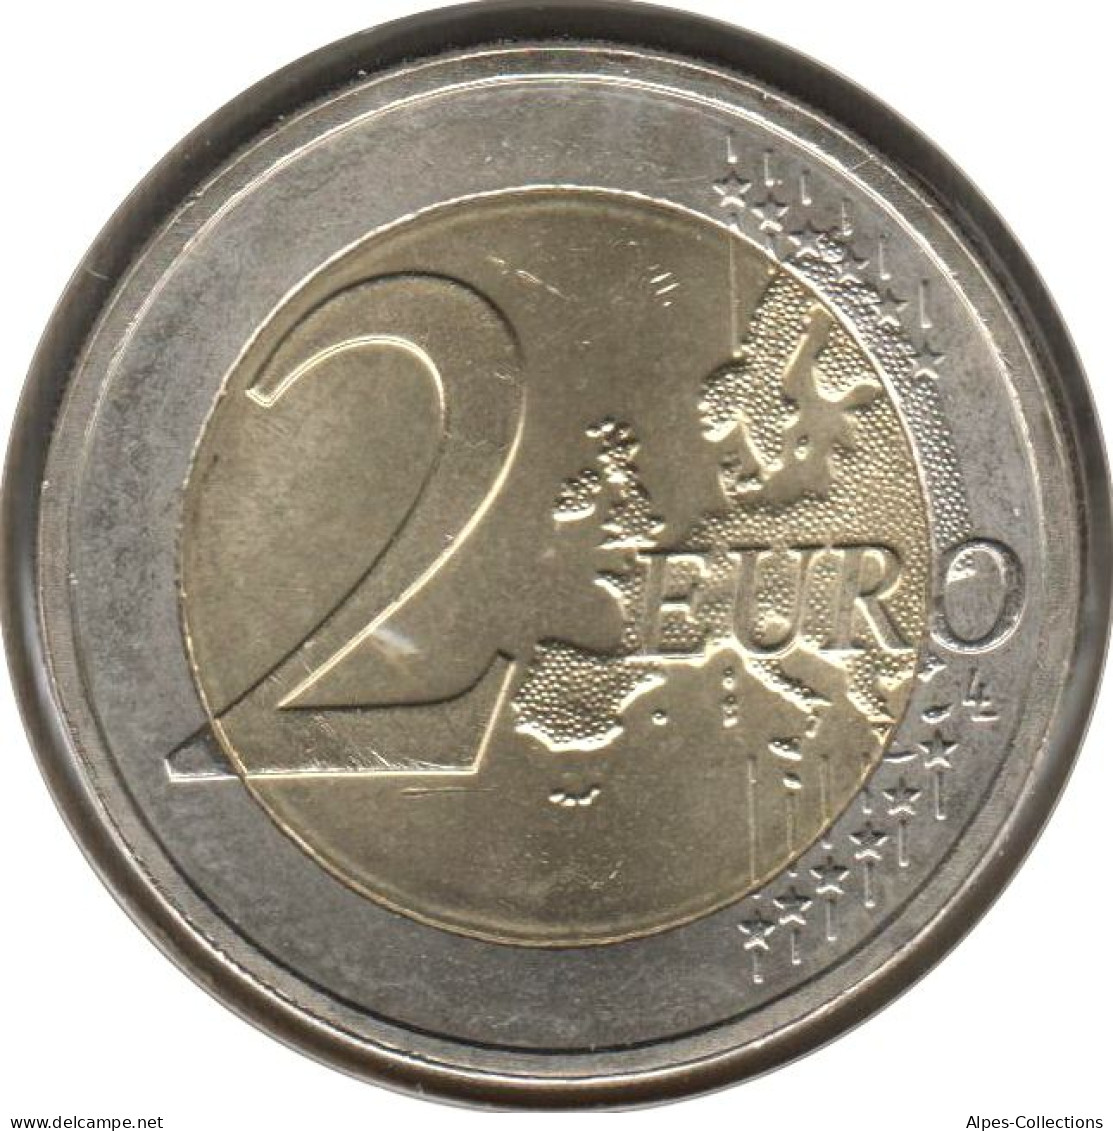 PB20012.1 - PAYS-BAS - 2 Euros Commémo. 10 Ans De L'euro - 2012 - Niederlande